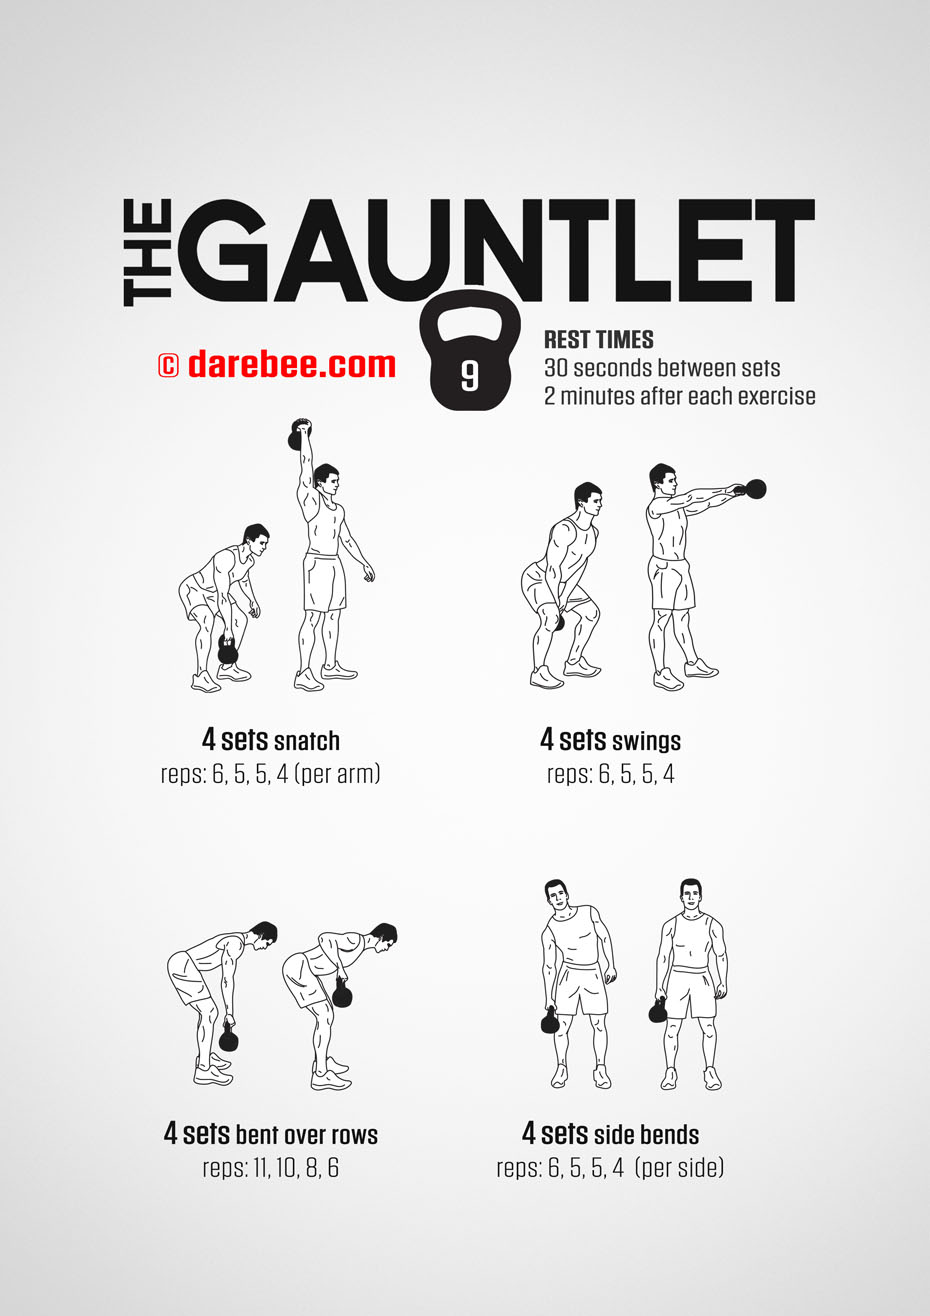 The Gauntlet - Kettlebell Fitness Program by DAREBEE